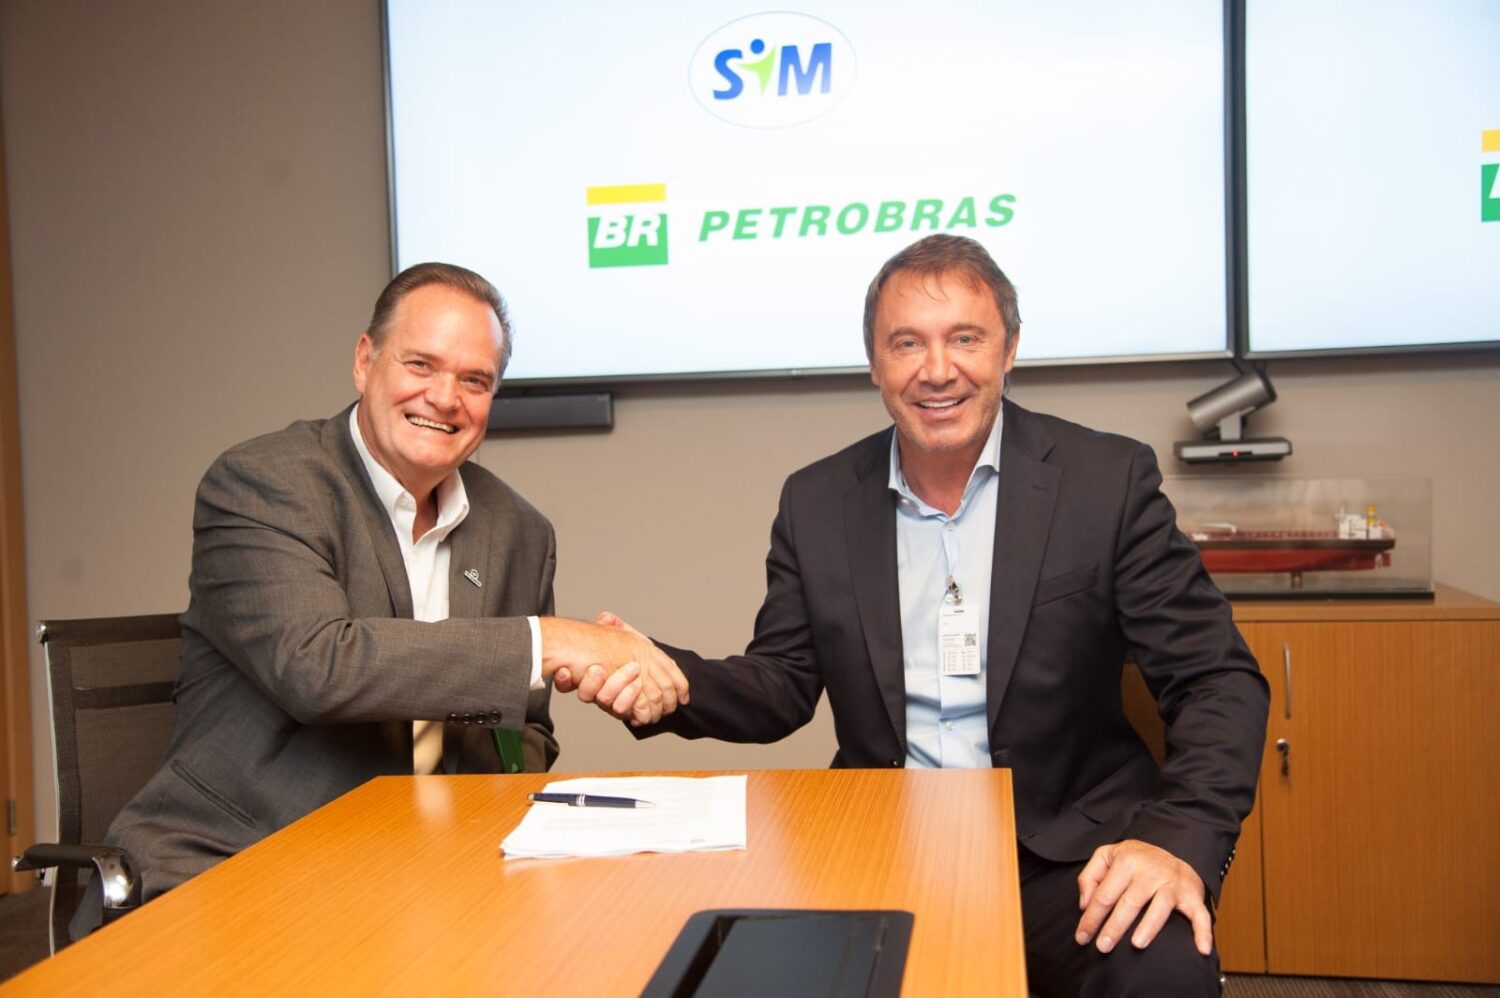 SIM Petrobras diesel renovável